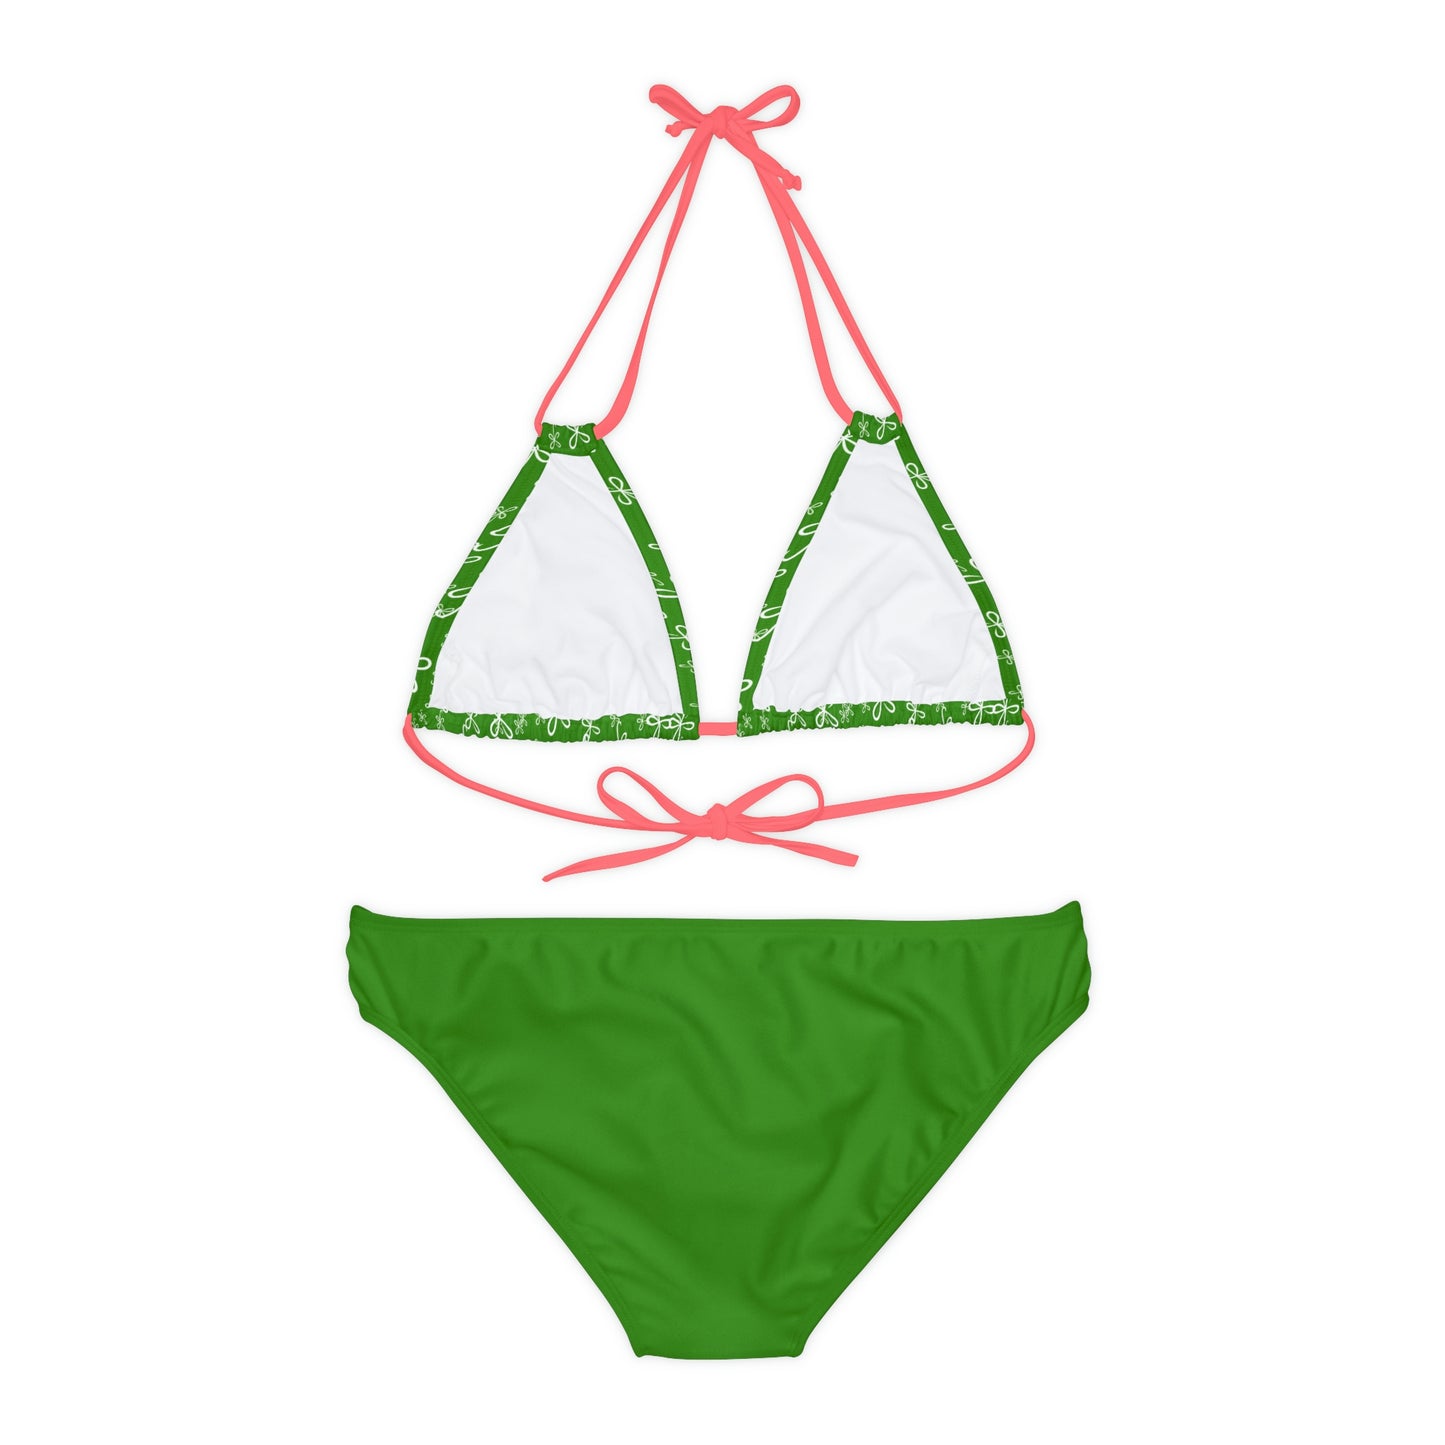 CLVR Strappy Bikini Set - Green Top with Field of Logo, Green Bottom